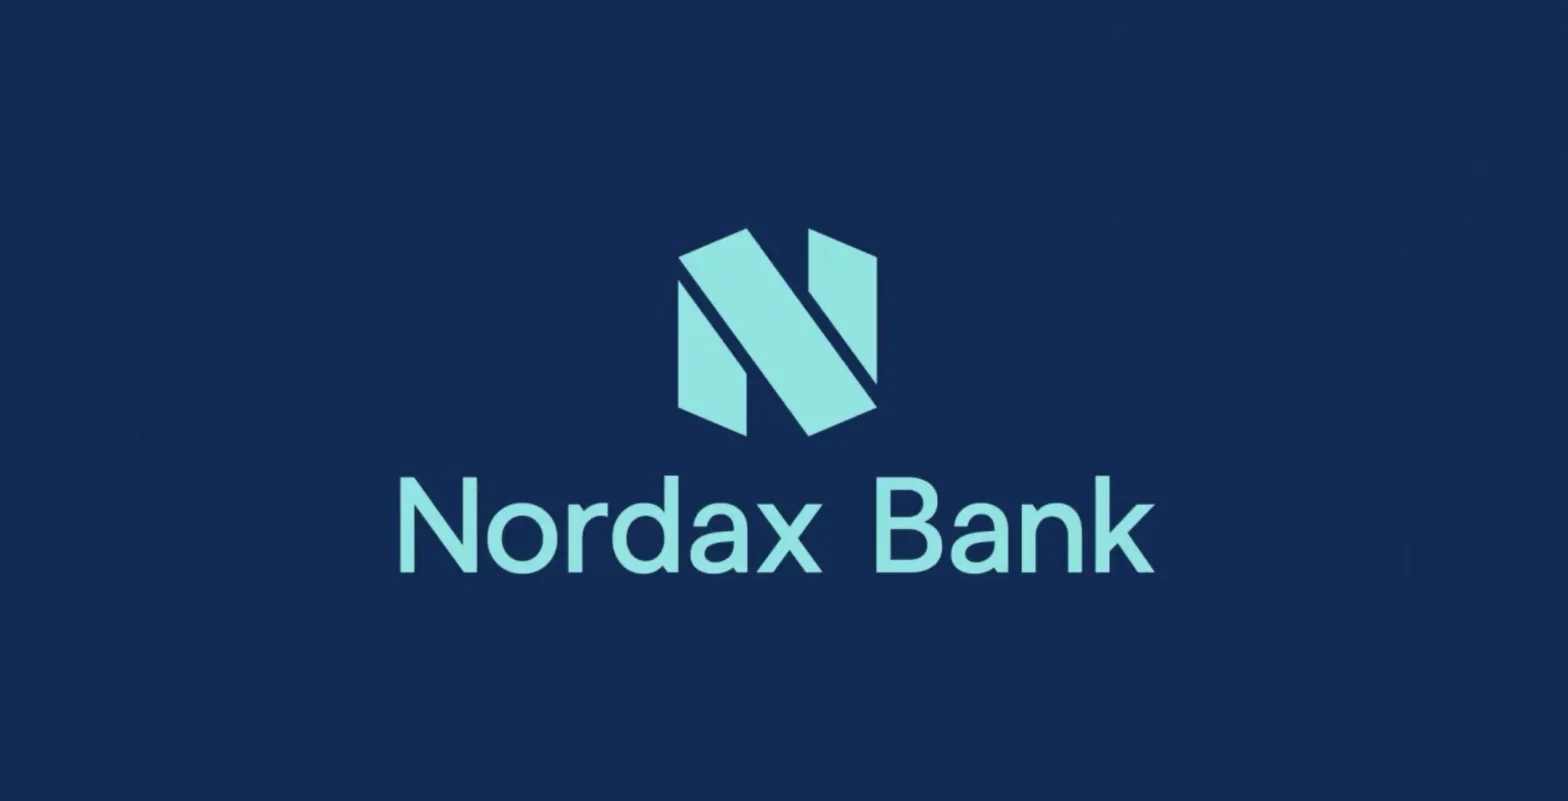 företagsbank nordax bank